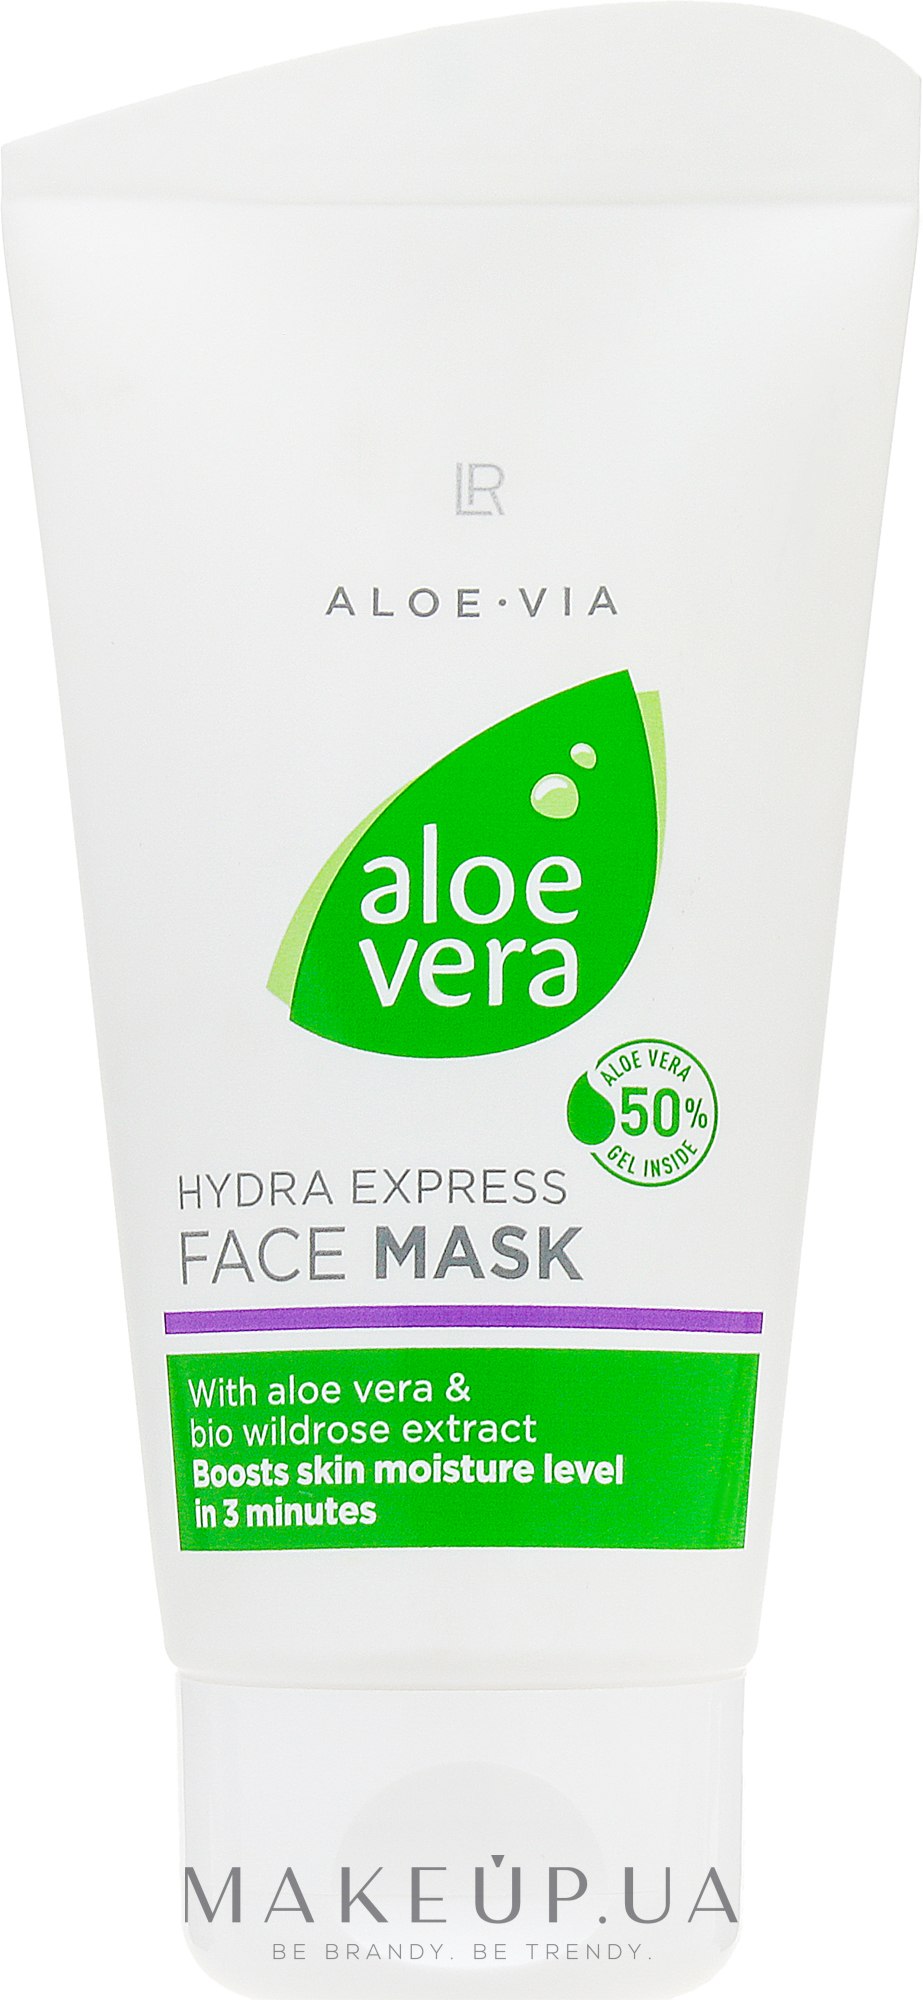 lr aloe via hydra express face mask